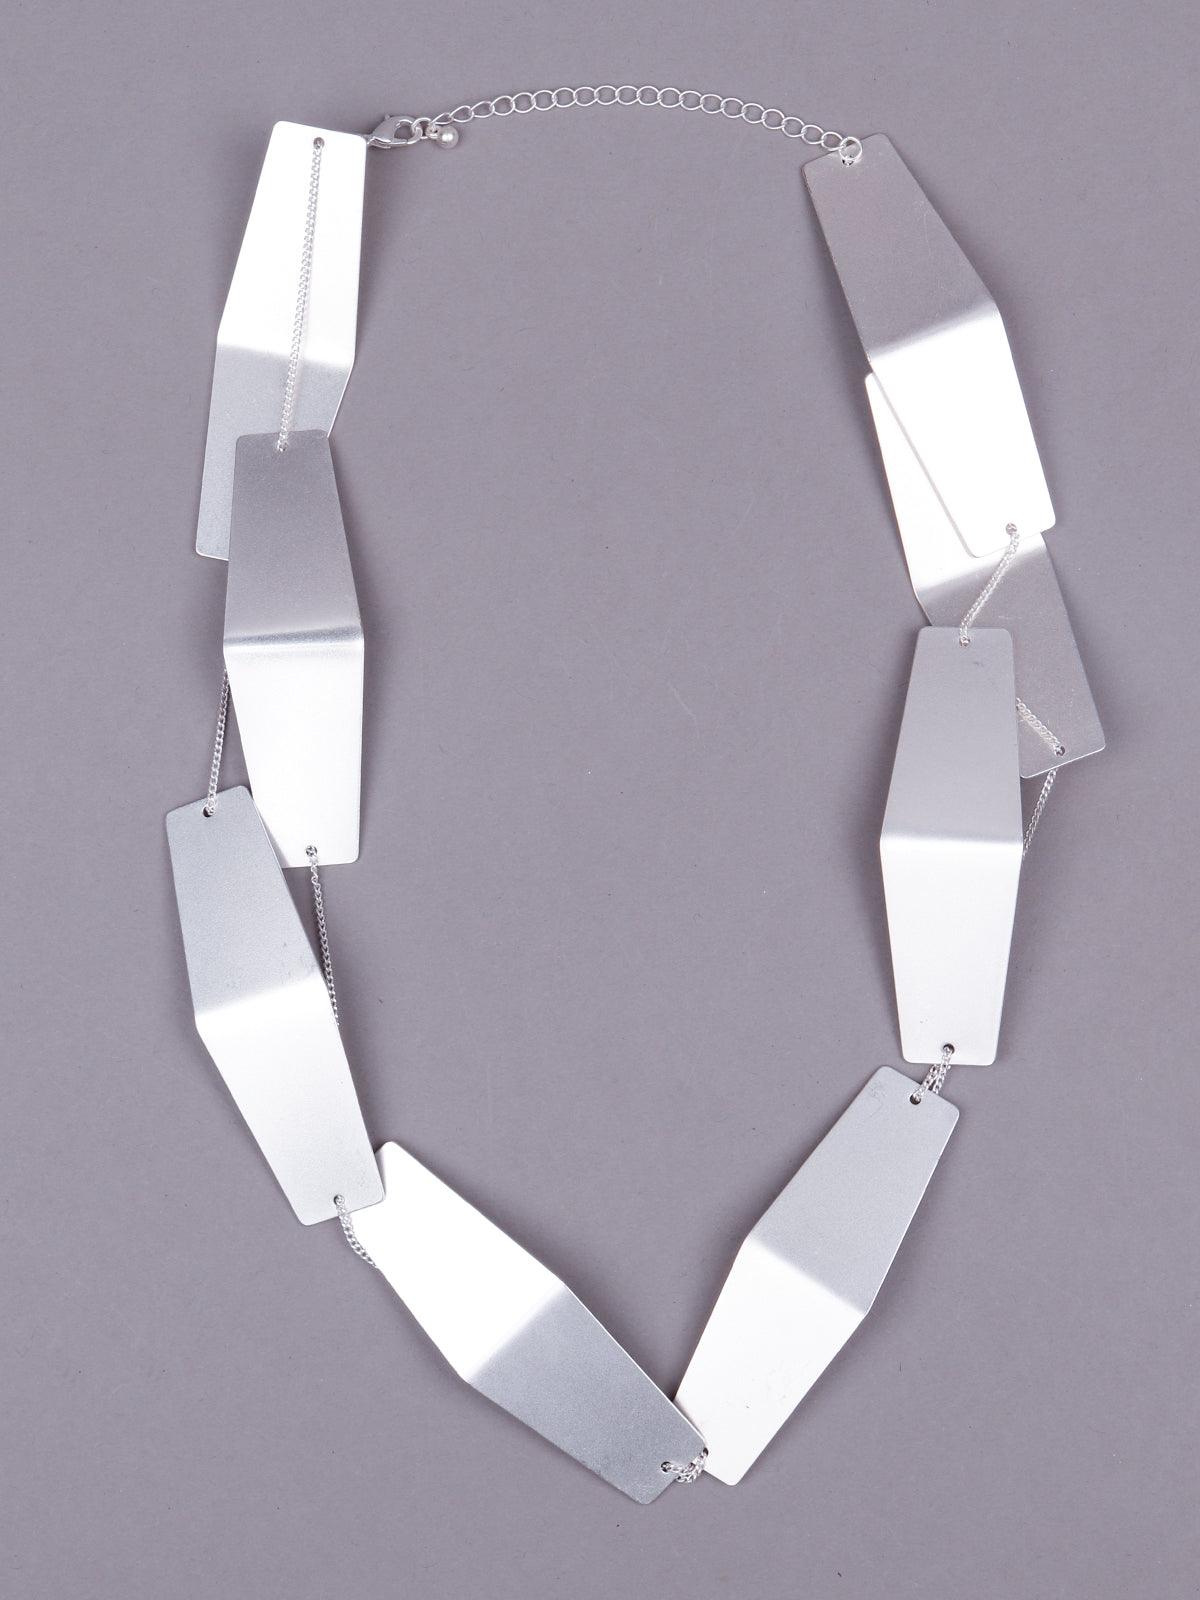 Women's Mordern Art Inspired Silver Necklace - Silver - Odette